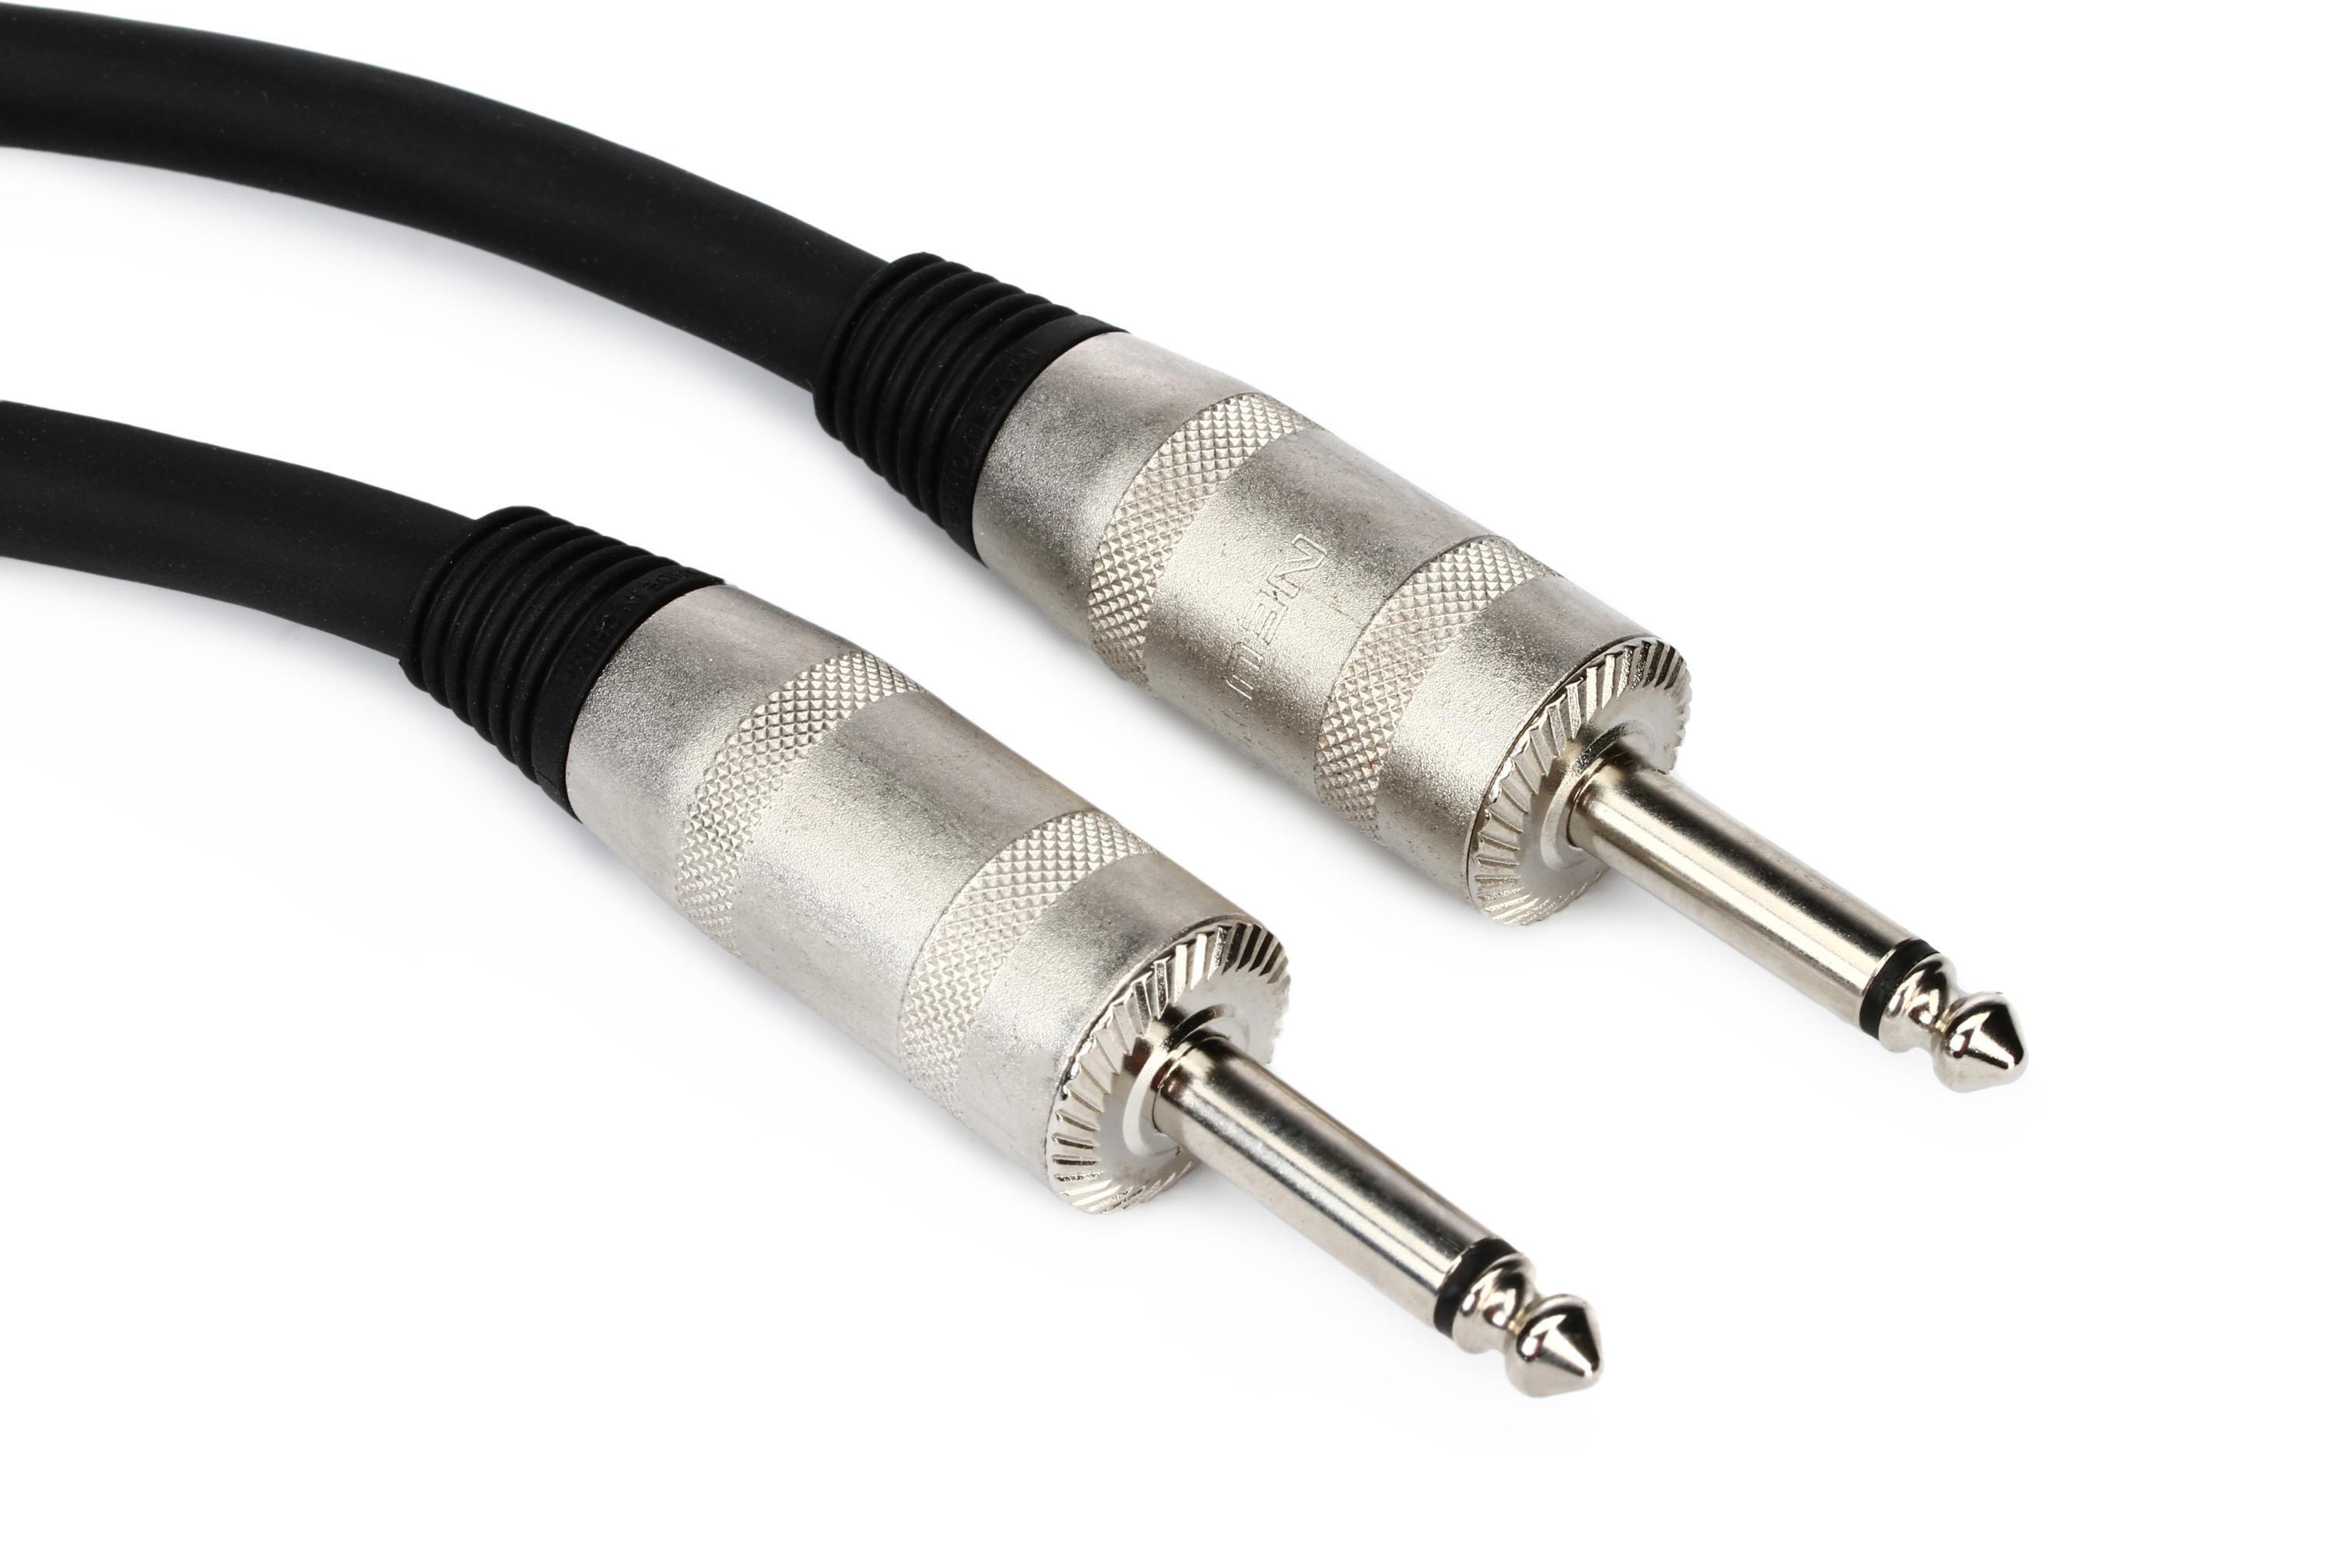 Bundled Item: RapcoHorizon H12-10 12ga 1/4 inch TS to 1/4 inch TS Speaker Cable - 10 foot